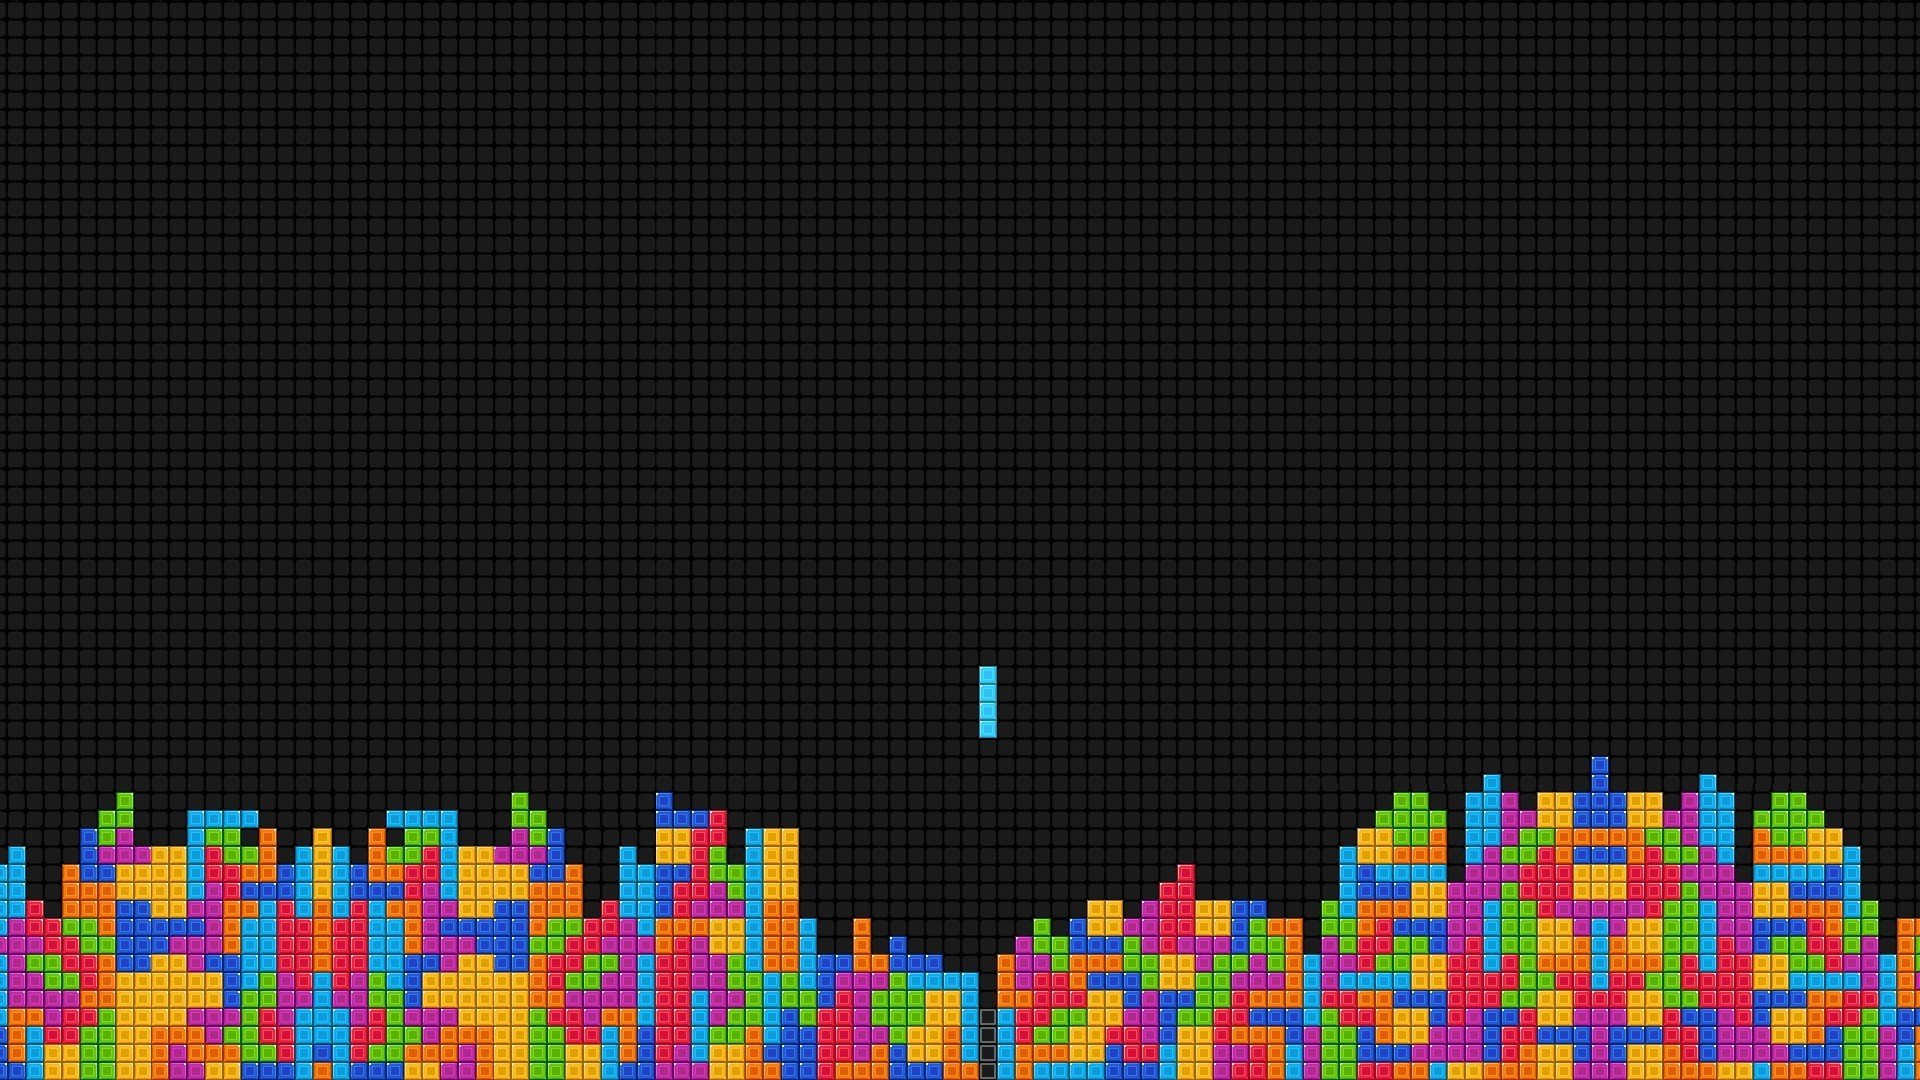 Tetris HD Wallpaper Background Image 1920x1080 ID239007 1920x1080